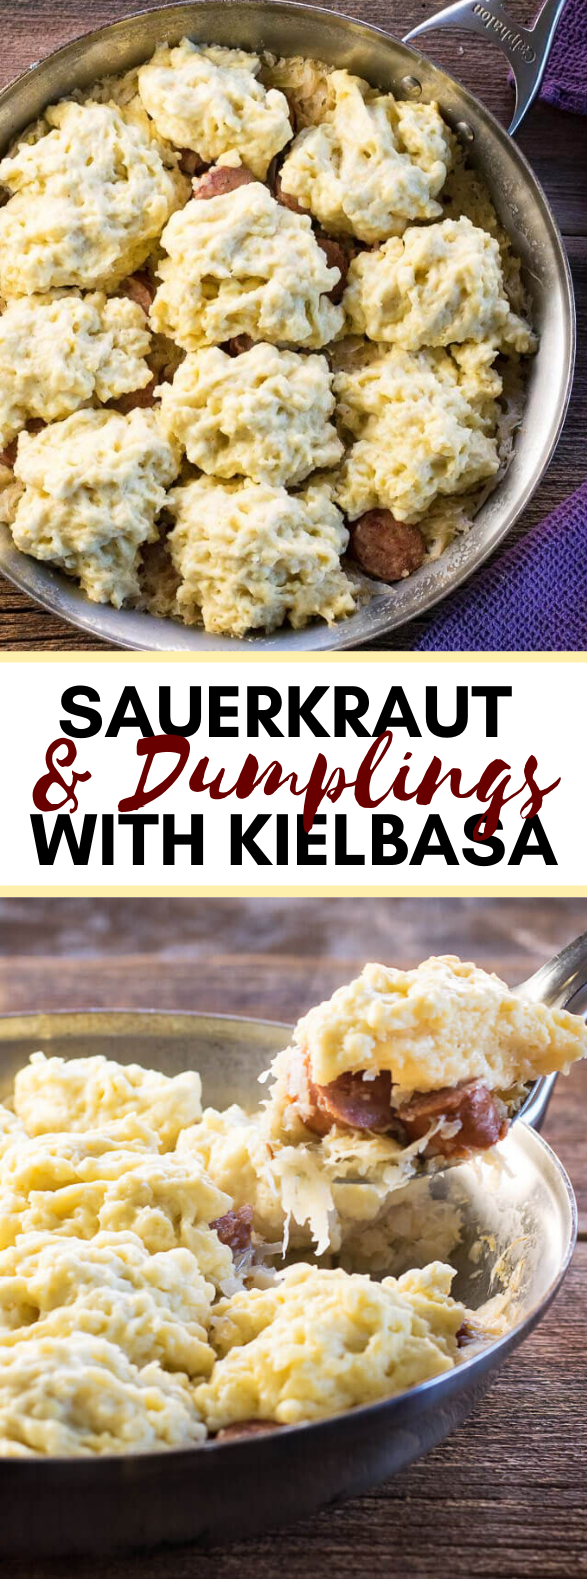 Sauerkraut and Dumplings with Kielbasa #meals #comfortfood